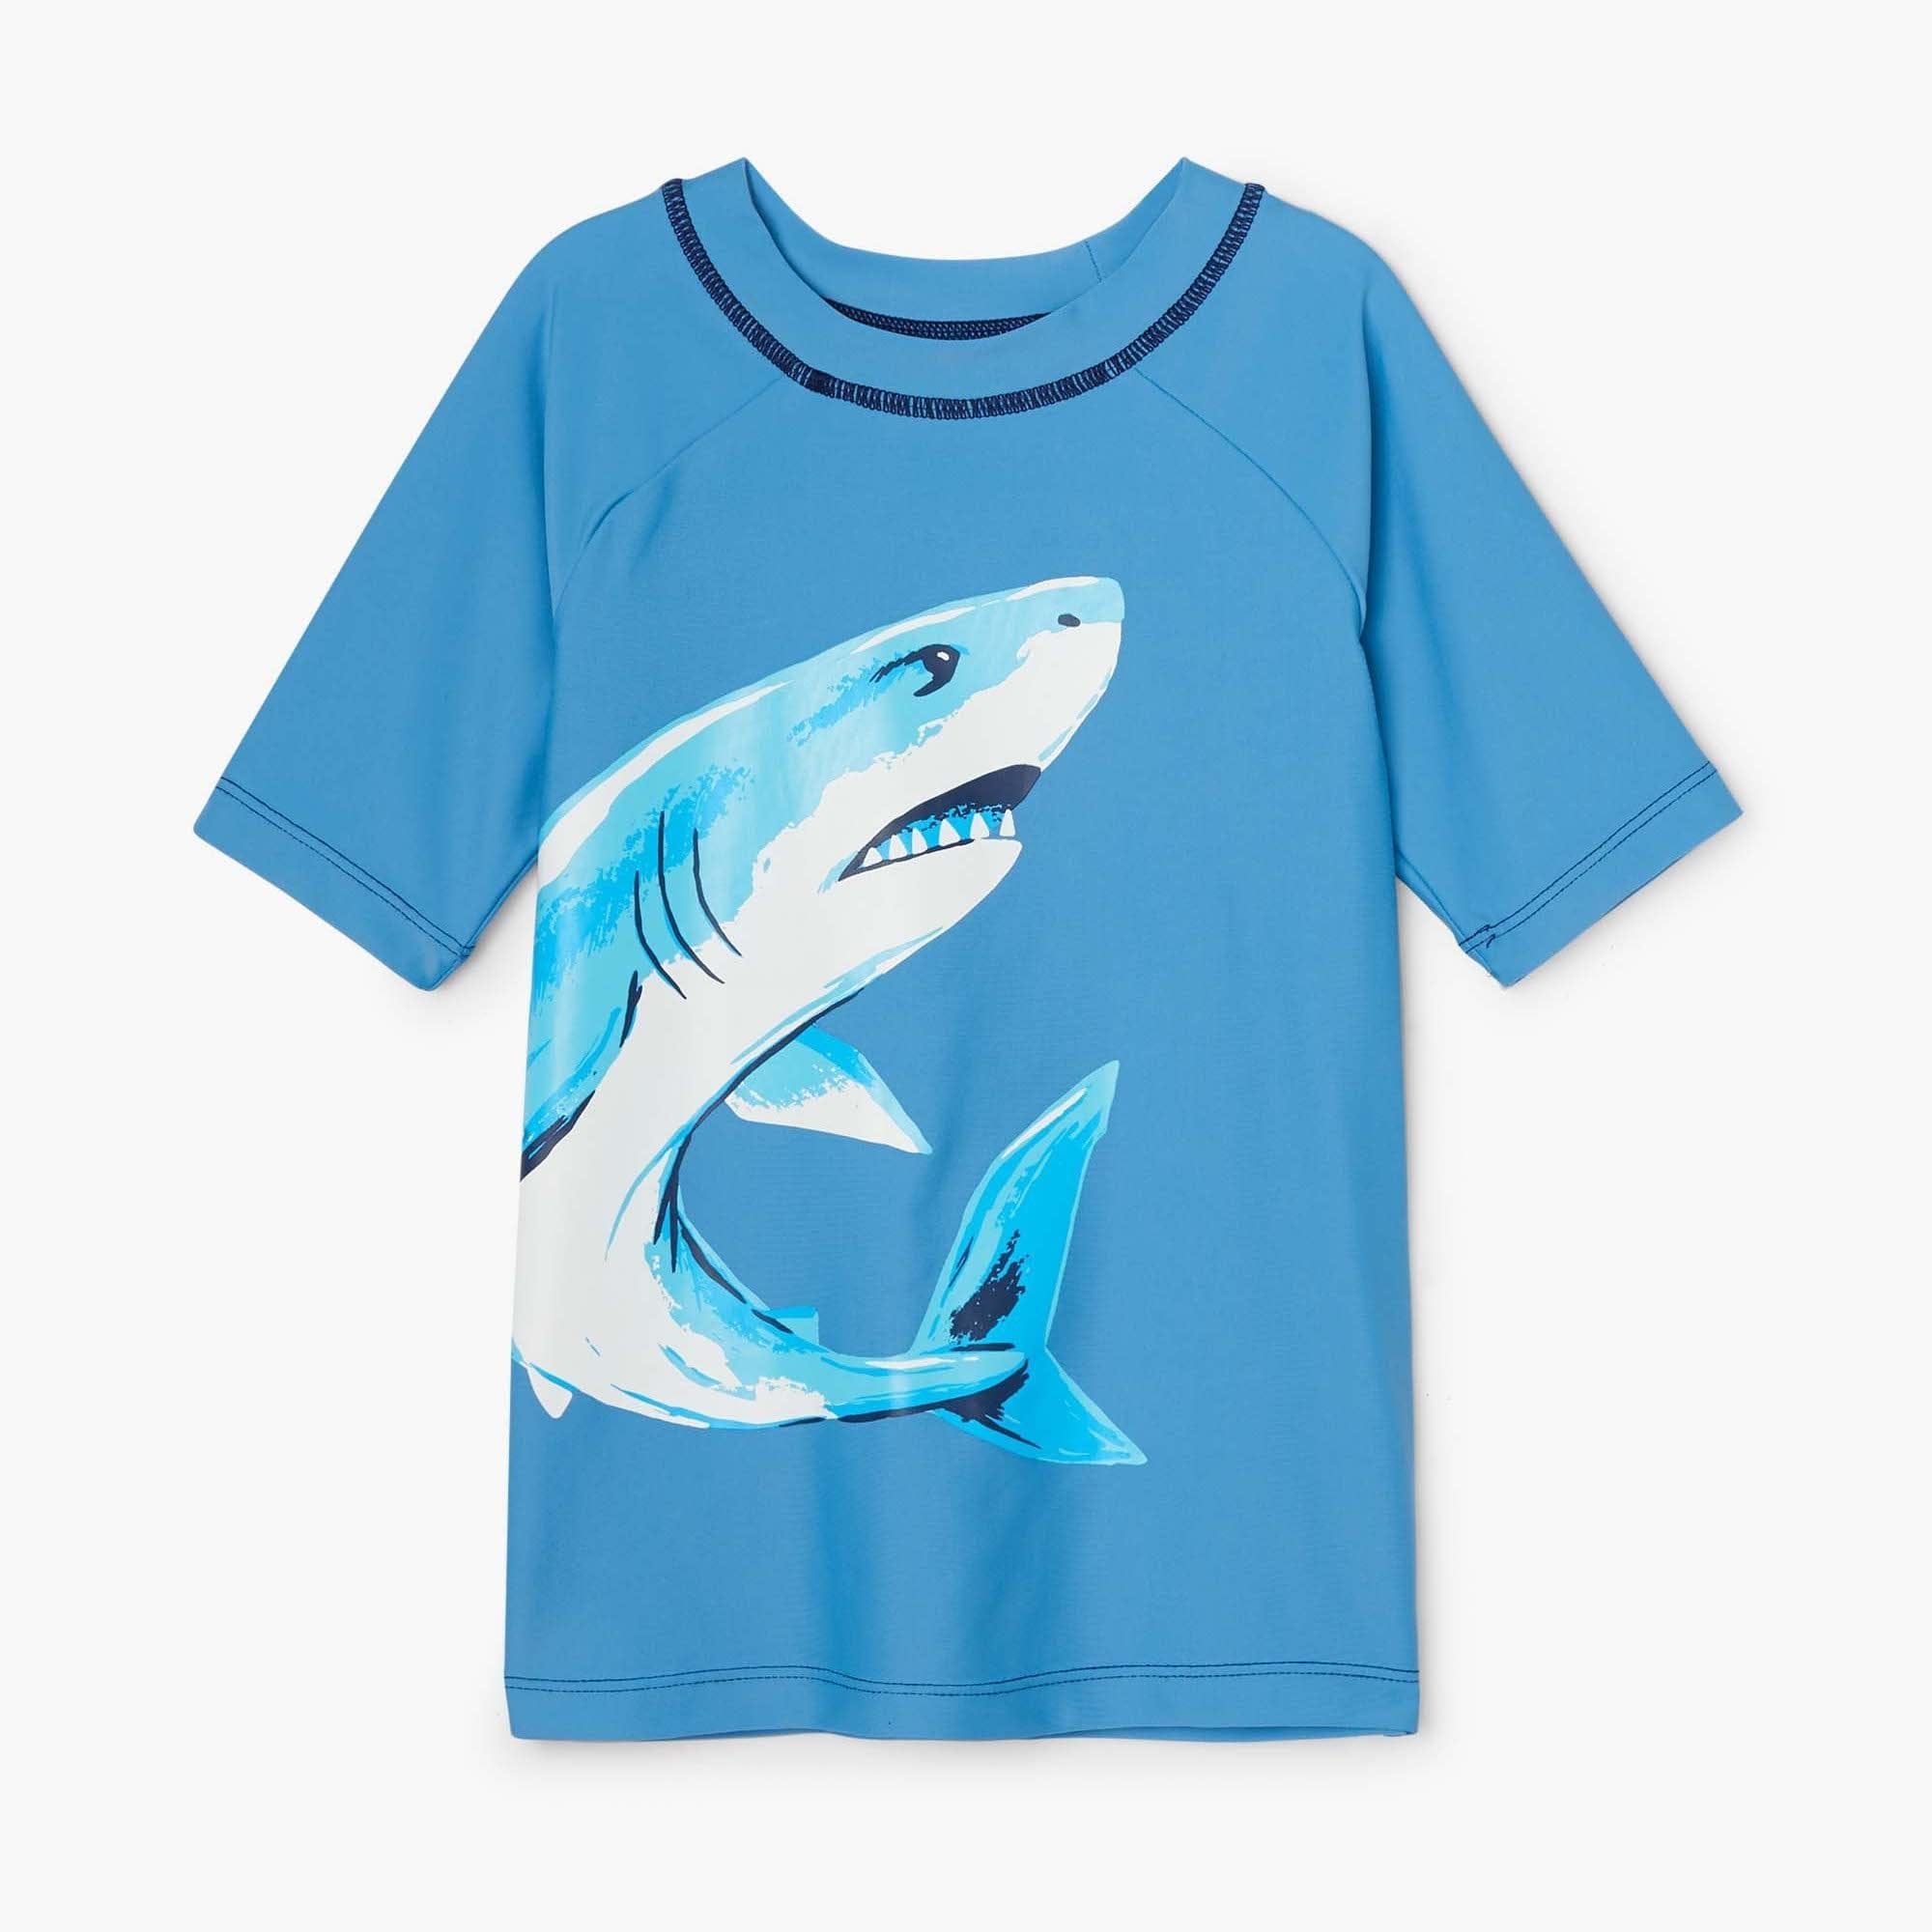 Hatley ’Deep Sea Shark’ Rashguard Top - T-shirt